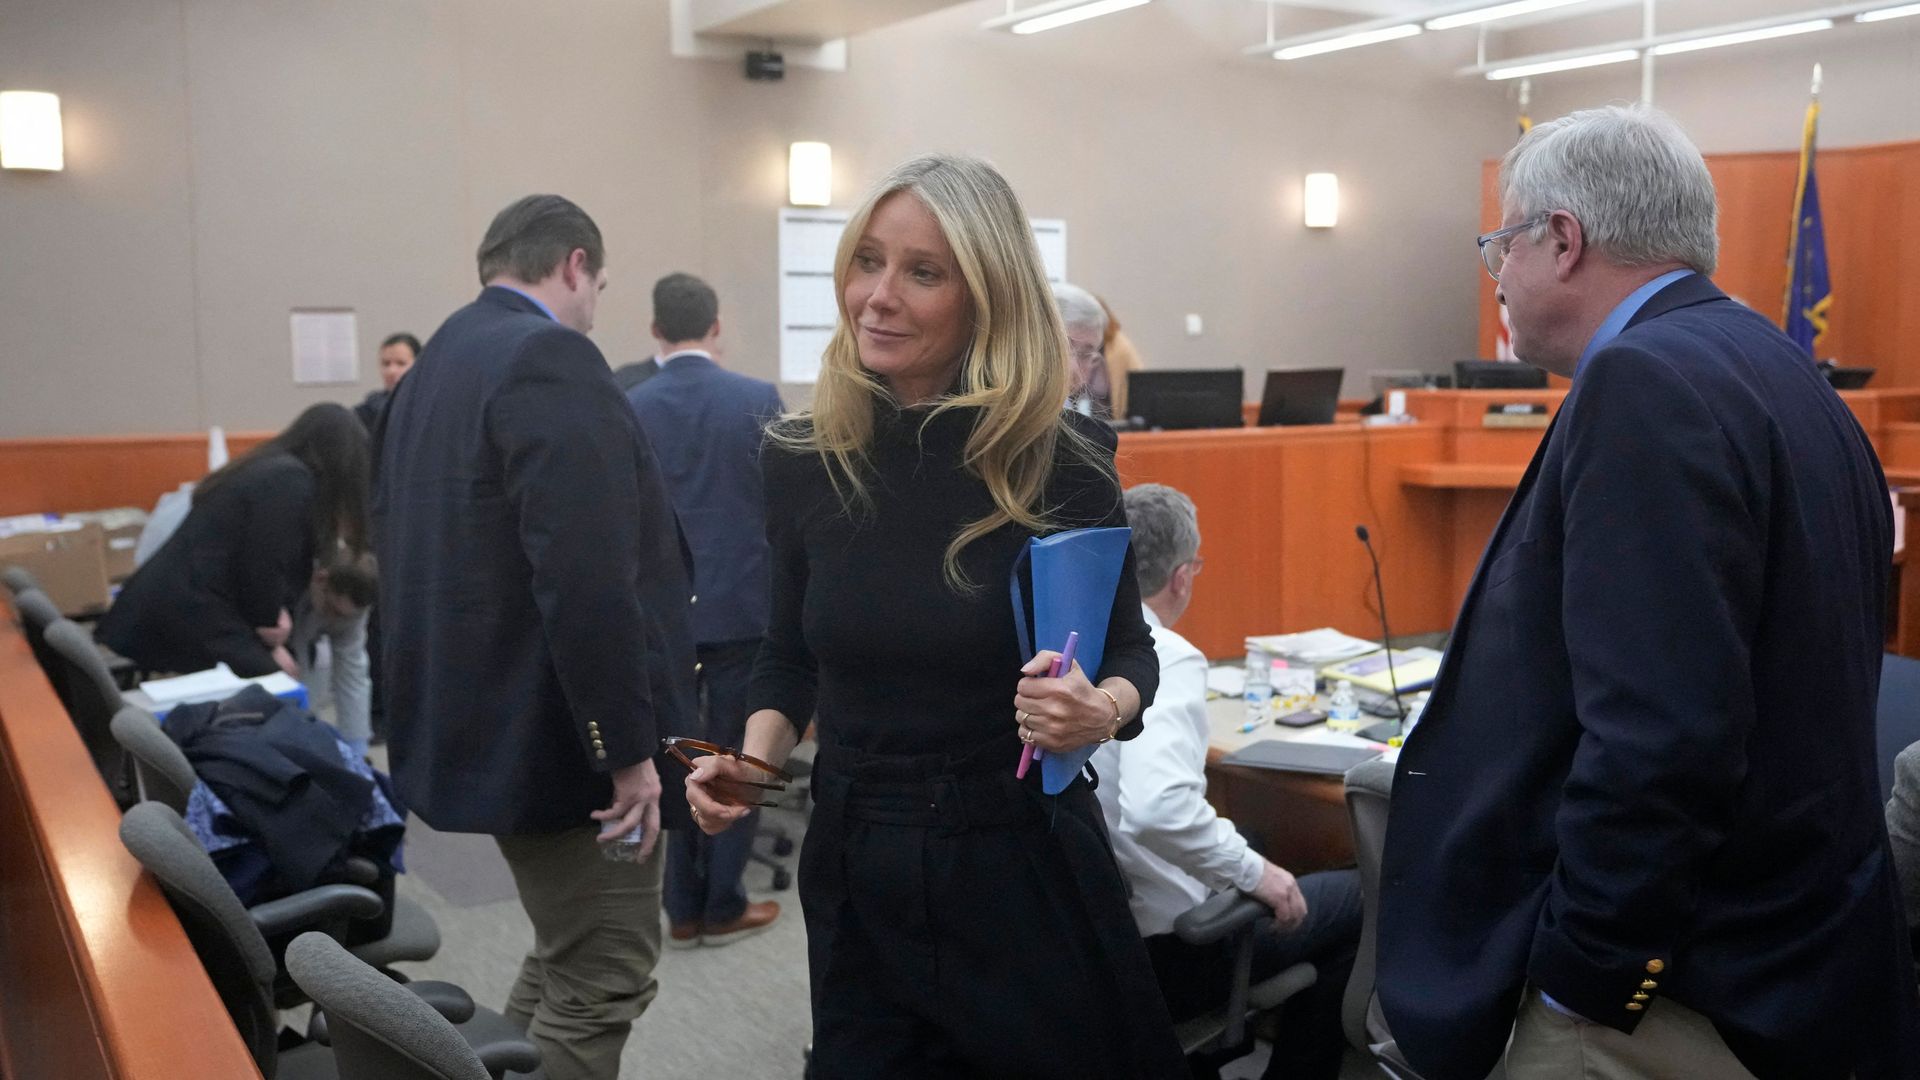 US actress Gwyneth Paltrow Gwyneth Paltrow leaves the courtroom